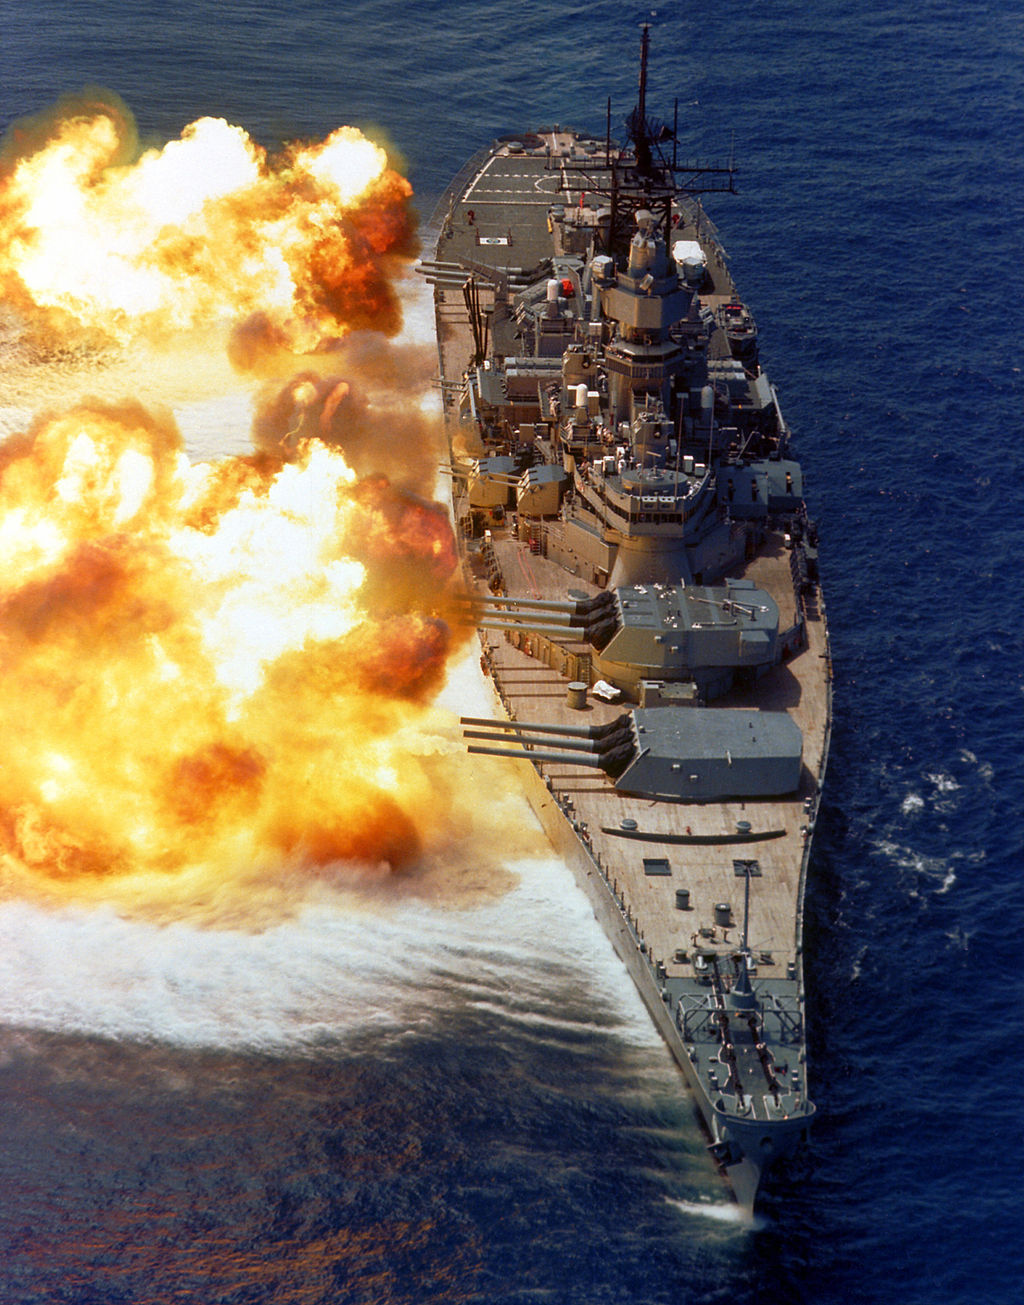 An image of an American warship firing a massive broadside.